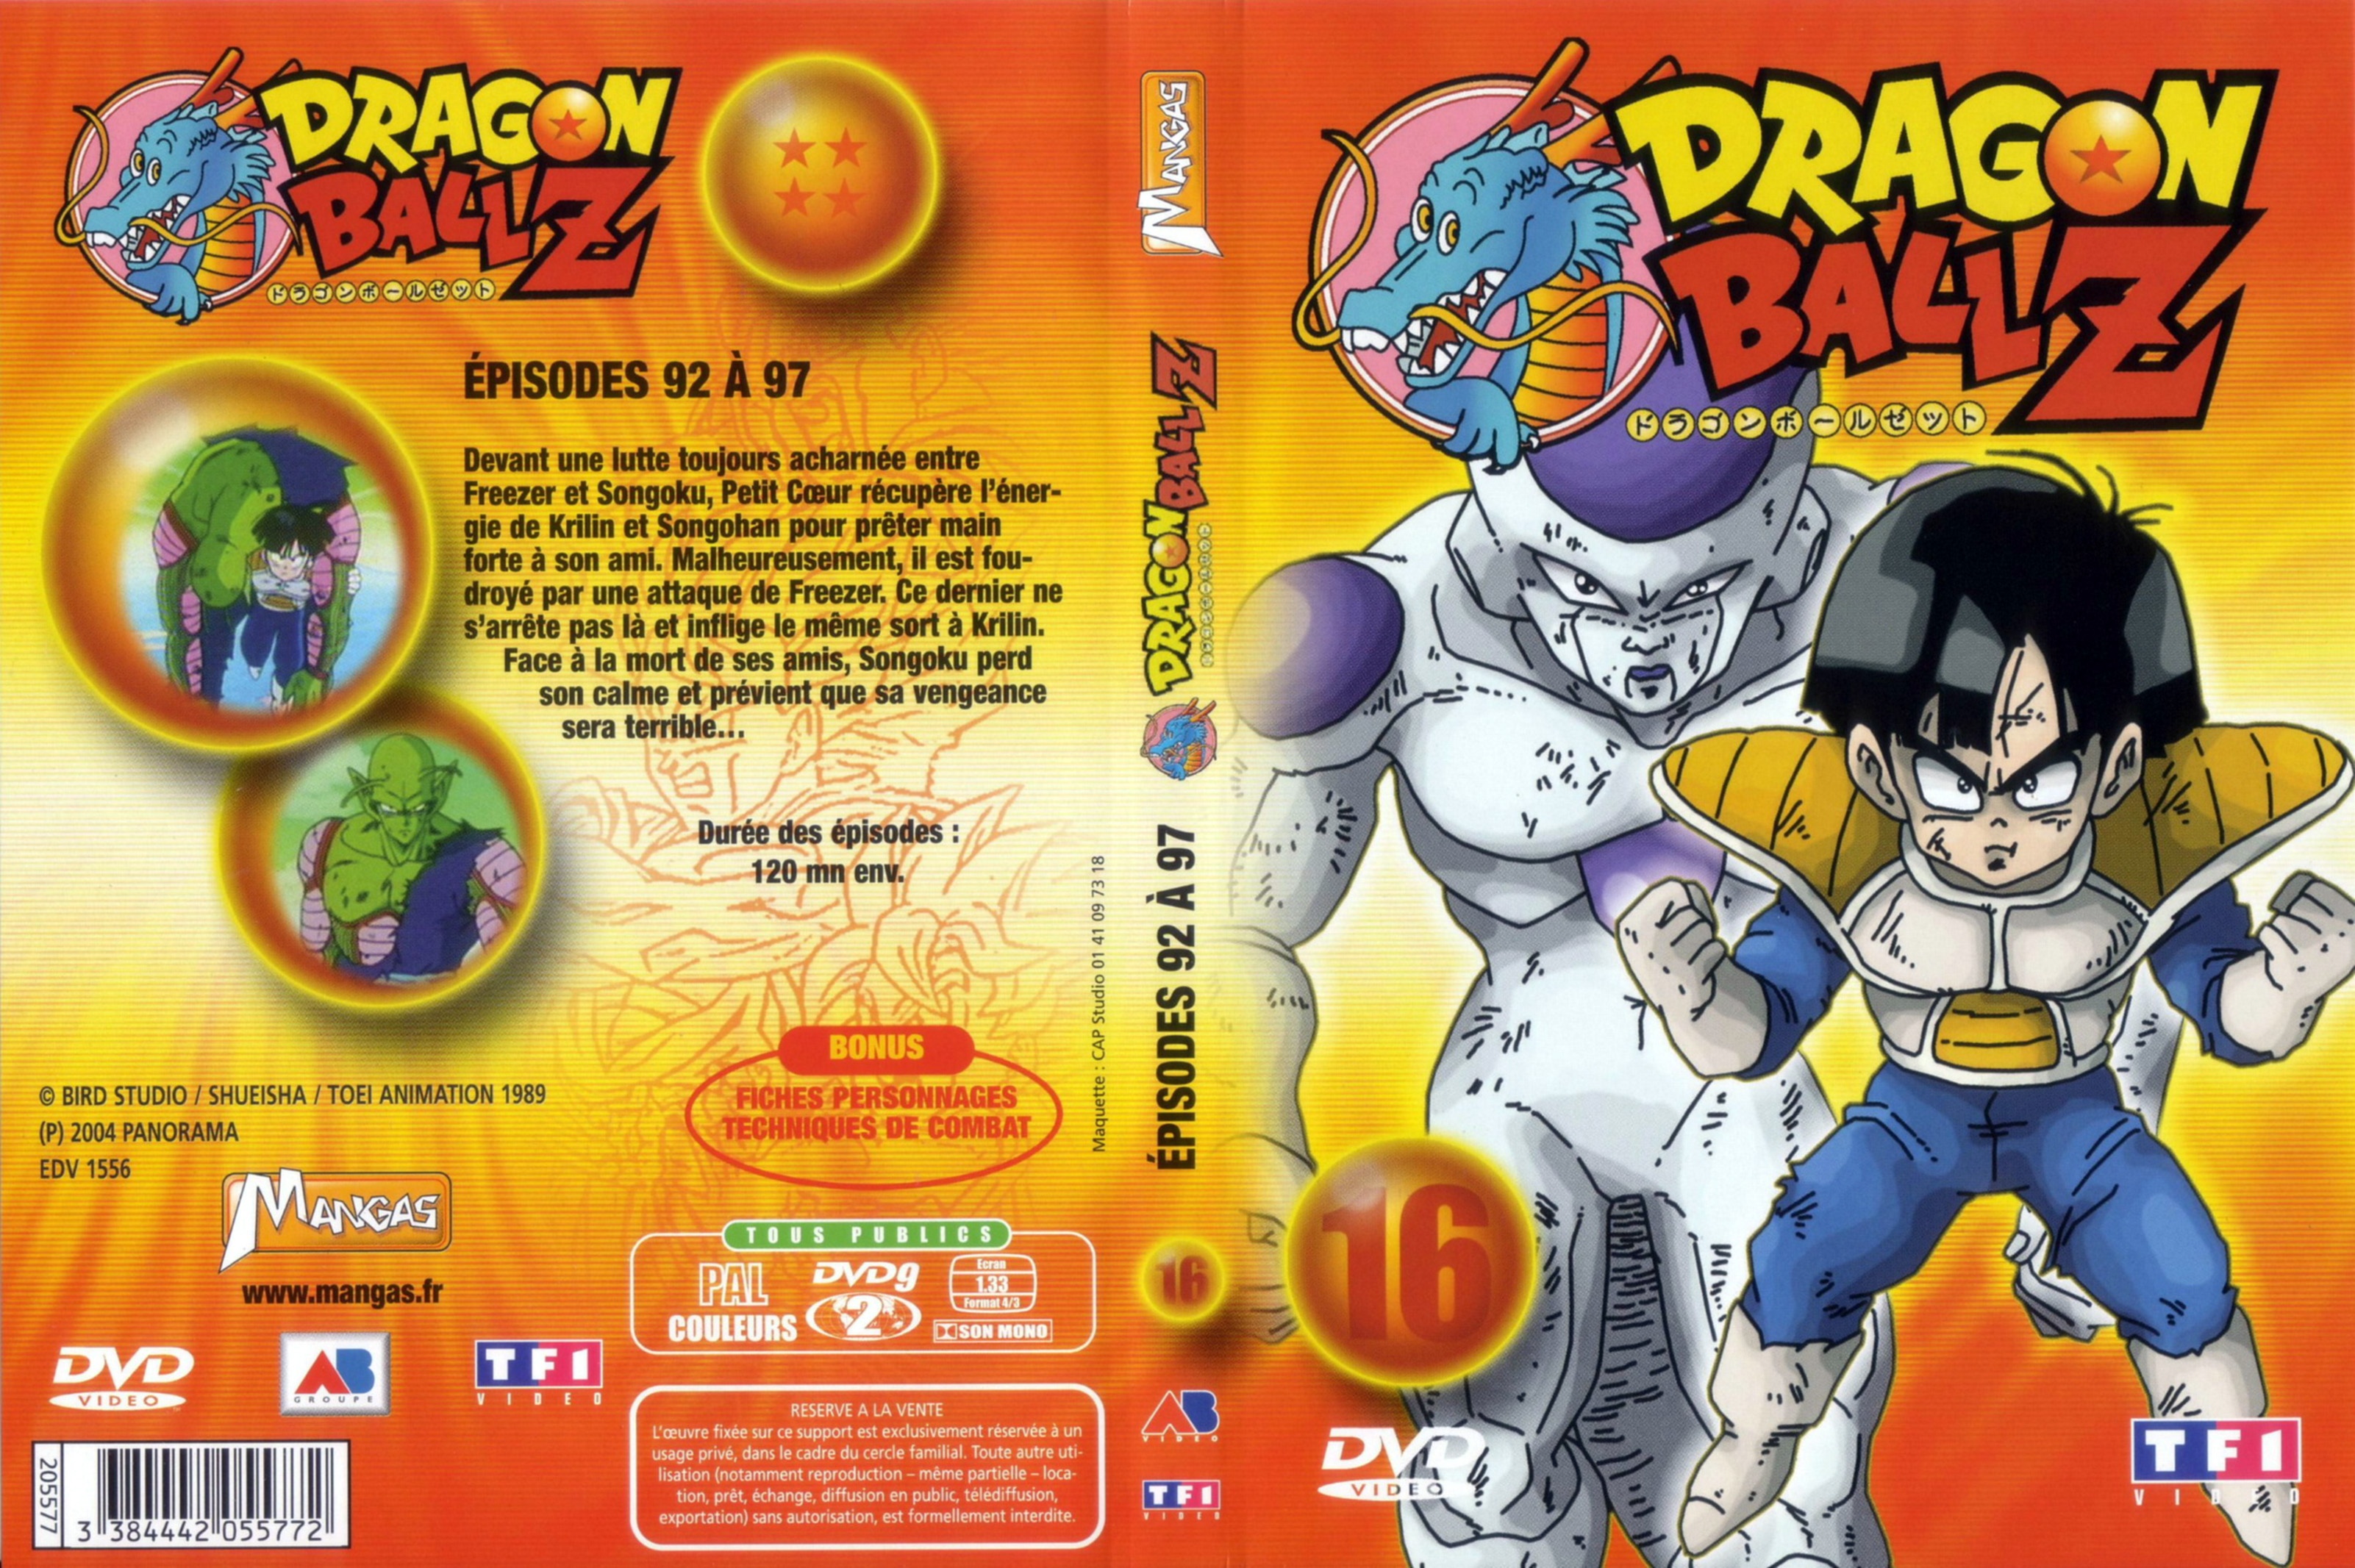 Jaquette DVD Dragon ball Z vol 16